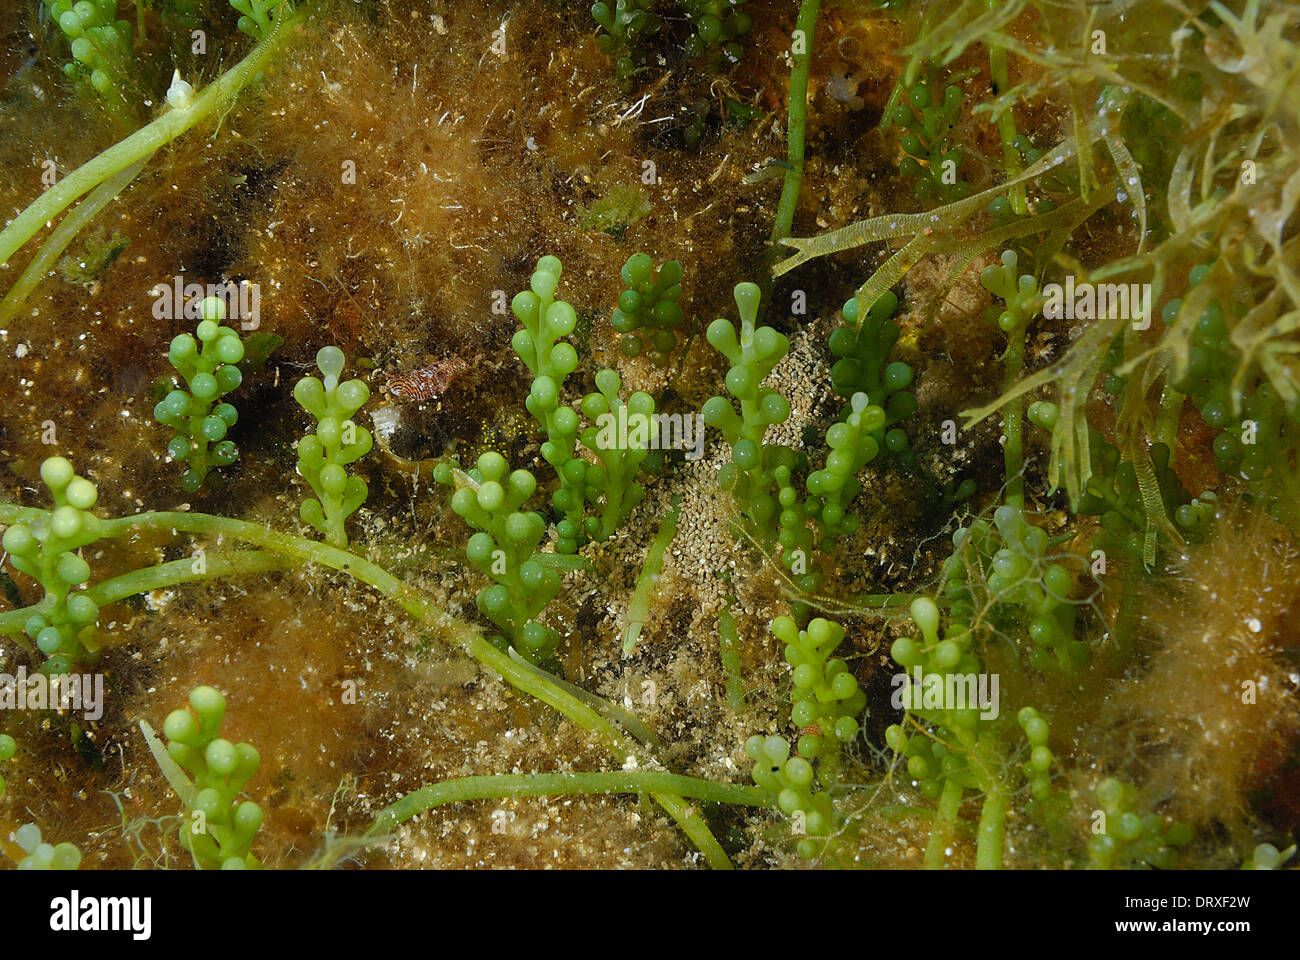 Allocton Invasive Seaweed Caulerpa racemosa var. cylindracea, Caulerpaceae, Capraia Island, Tuscany, Italy, Mediterranean Sea Stock Photo